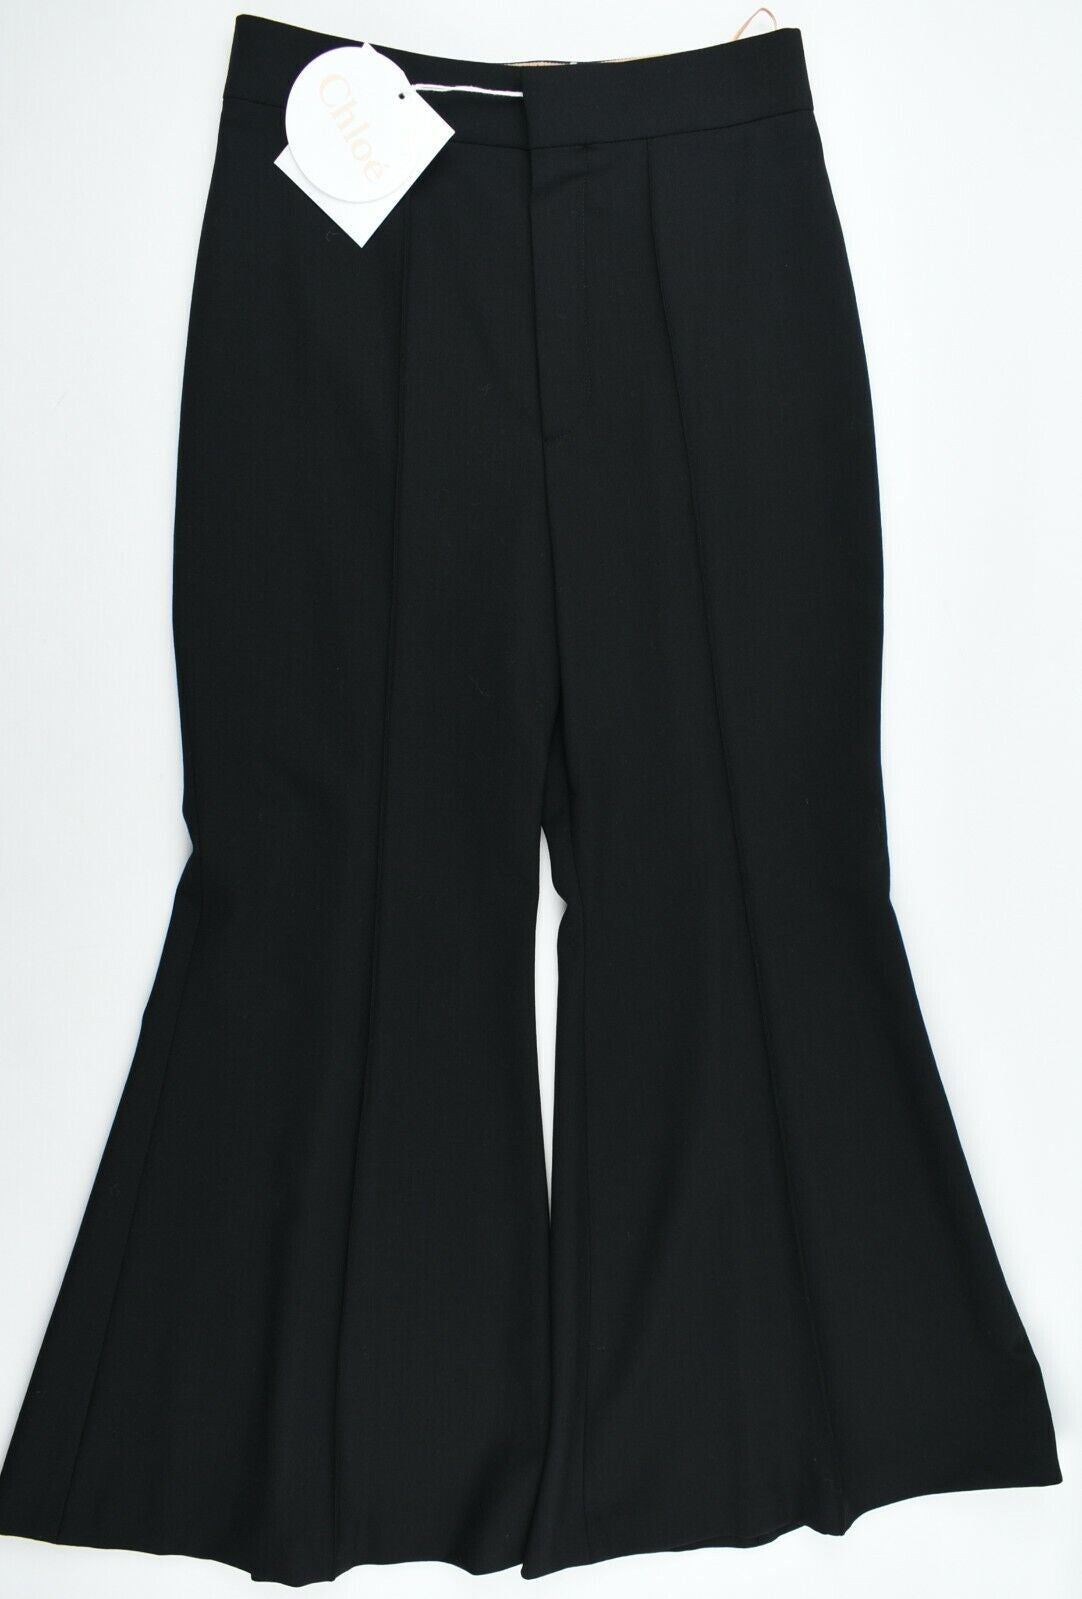 CHLOE Women's Black Cropped Trousers Designer Pants, 95% Wool, size UK 8